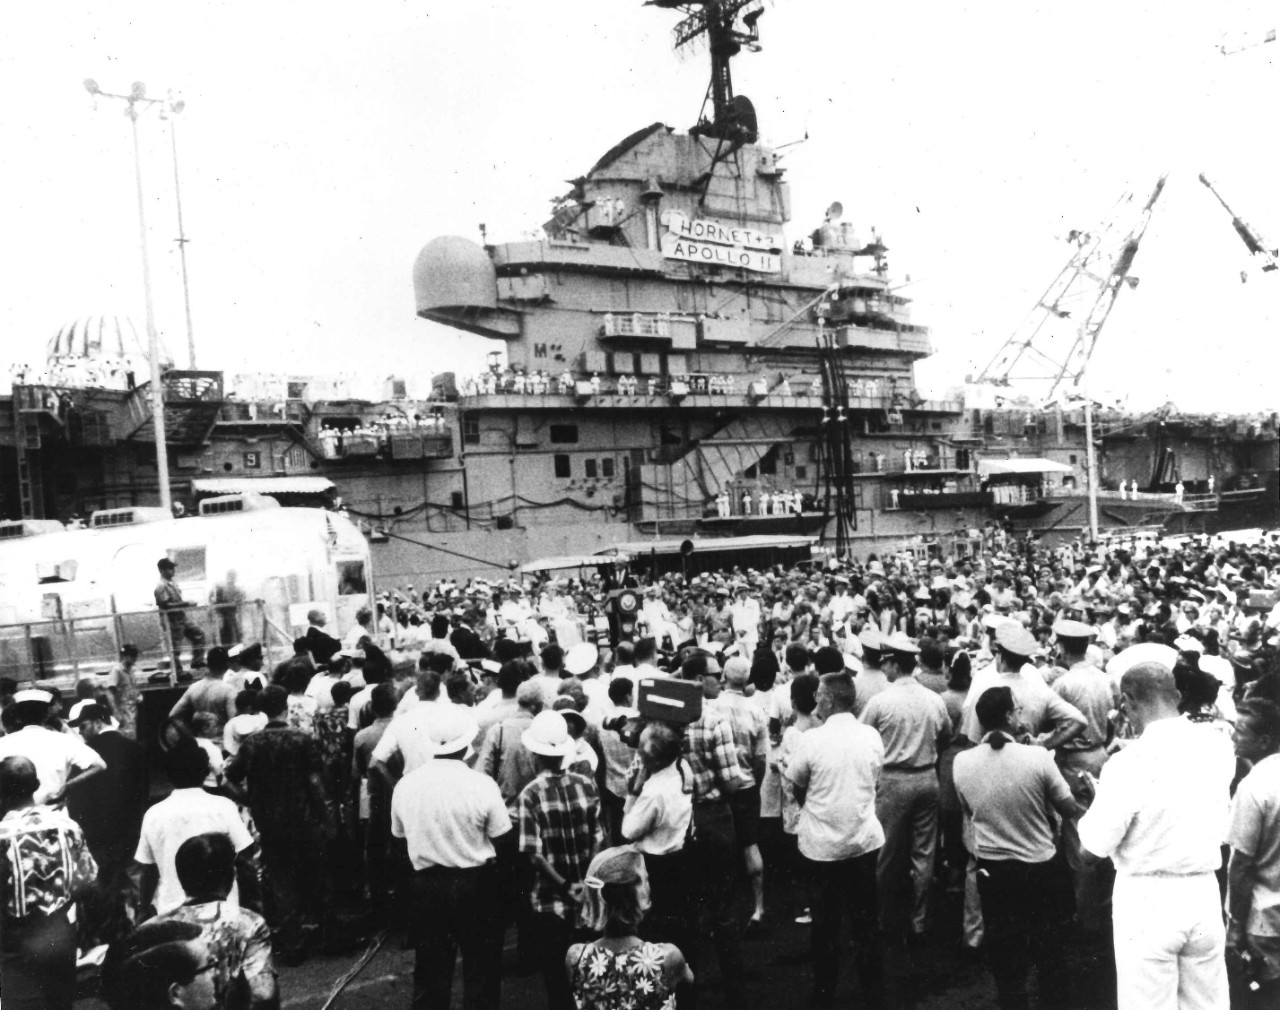 <p>Crowds greet USS Hornet (CVS-12) in Pearl Harbor.&nbsp;</p>
